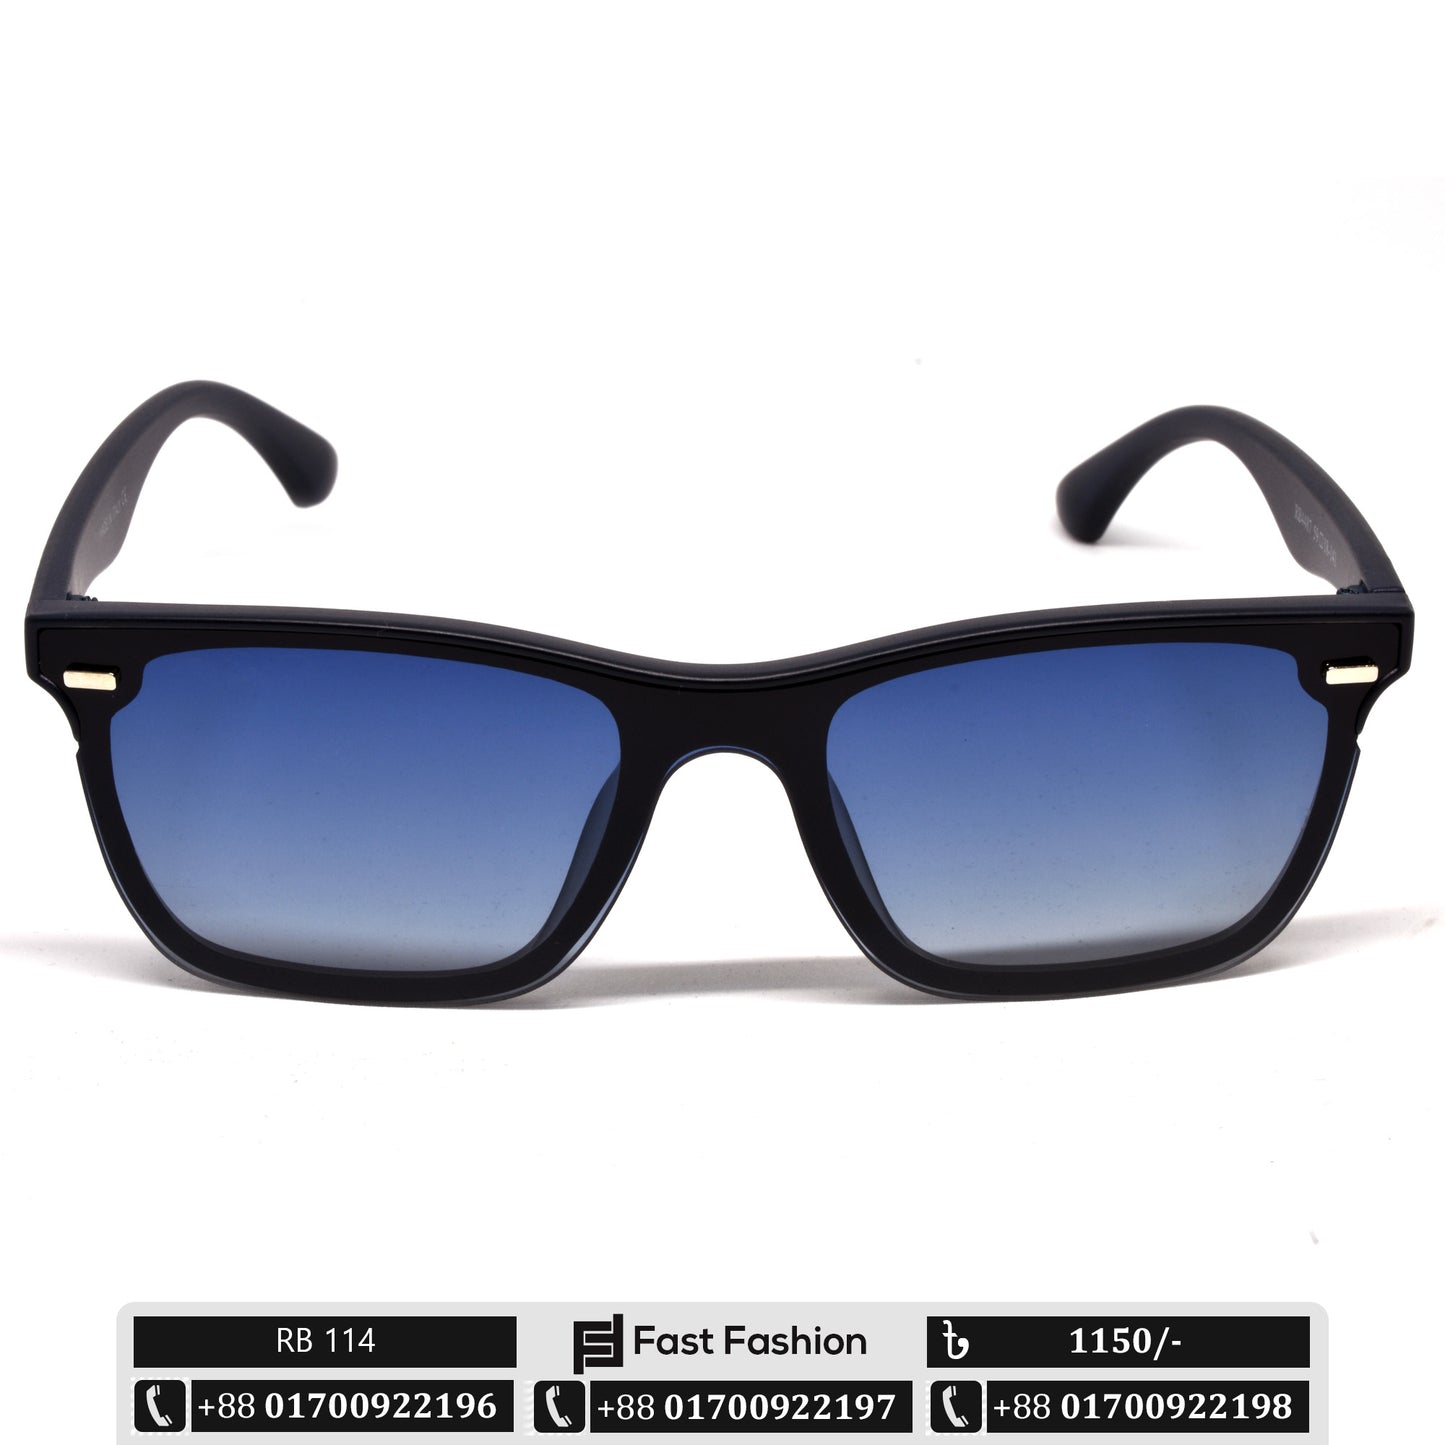 Stylish Looking Wayfarer  Premium Quality Sunglass for Men | RB 114